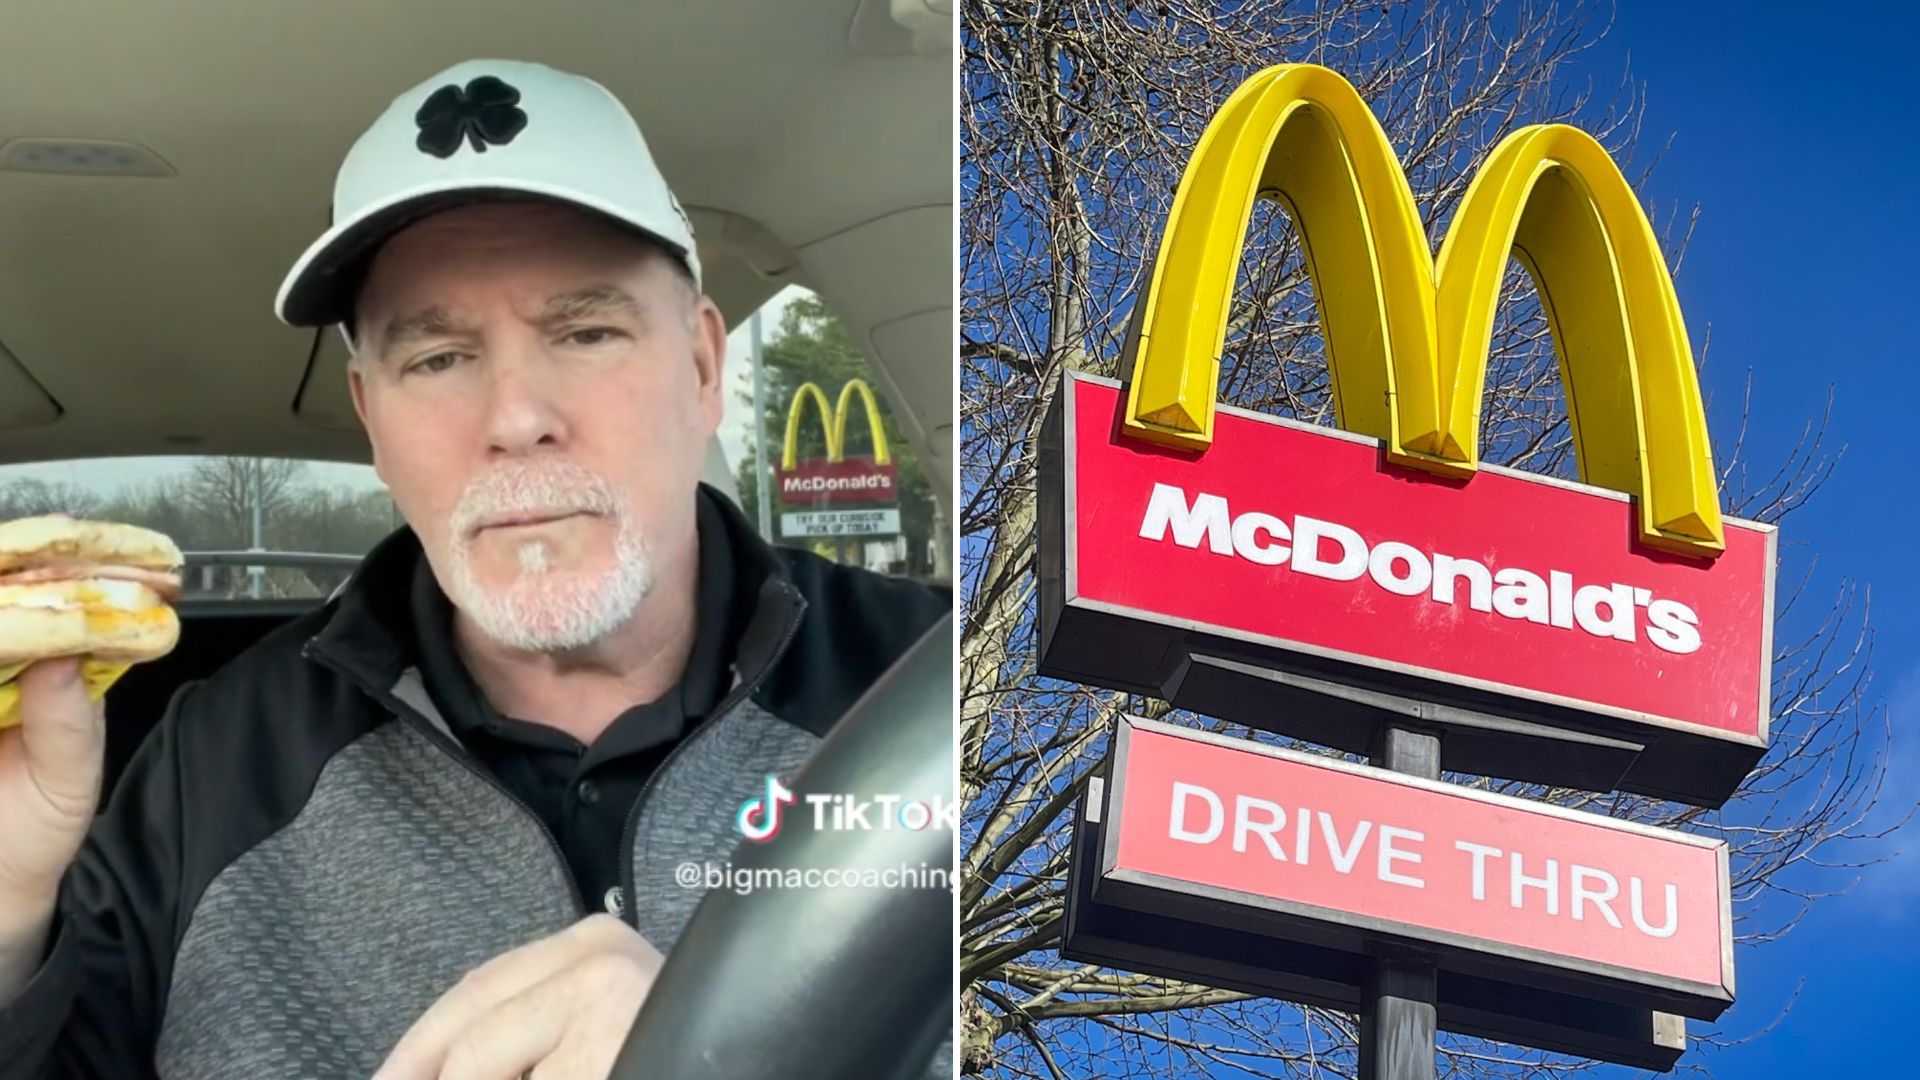 Un hombre completa una dieta de 100 días a base de McDonald's